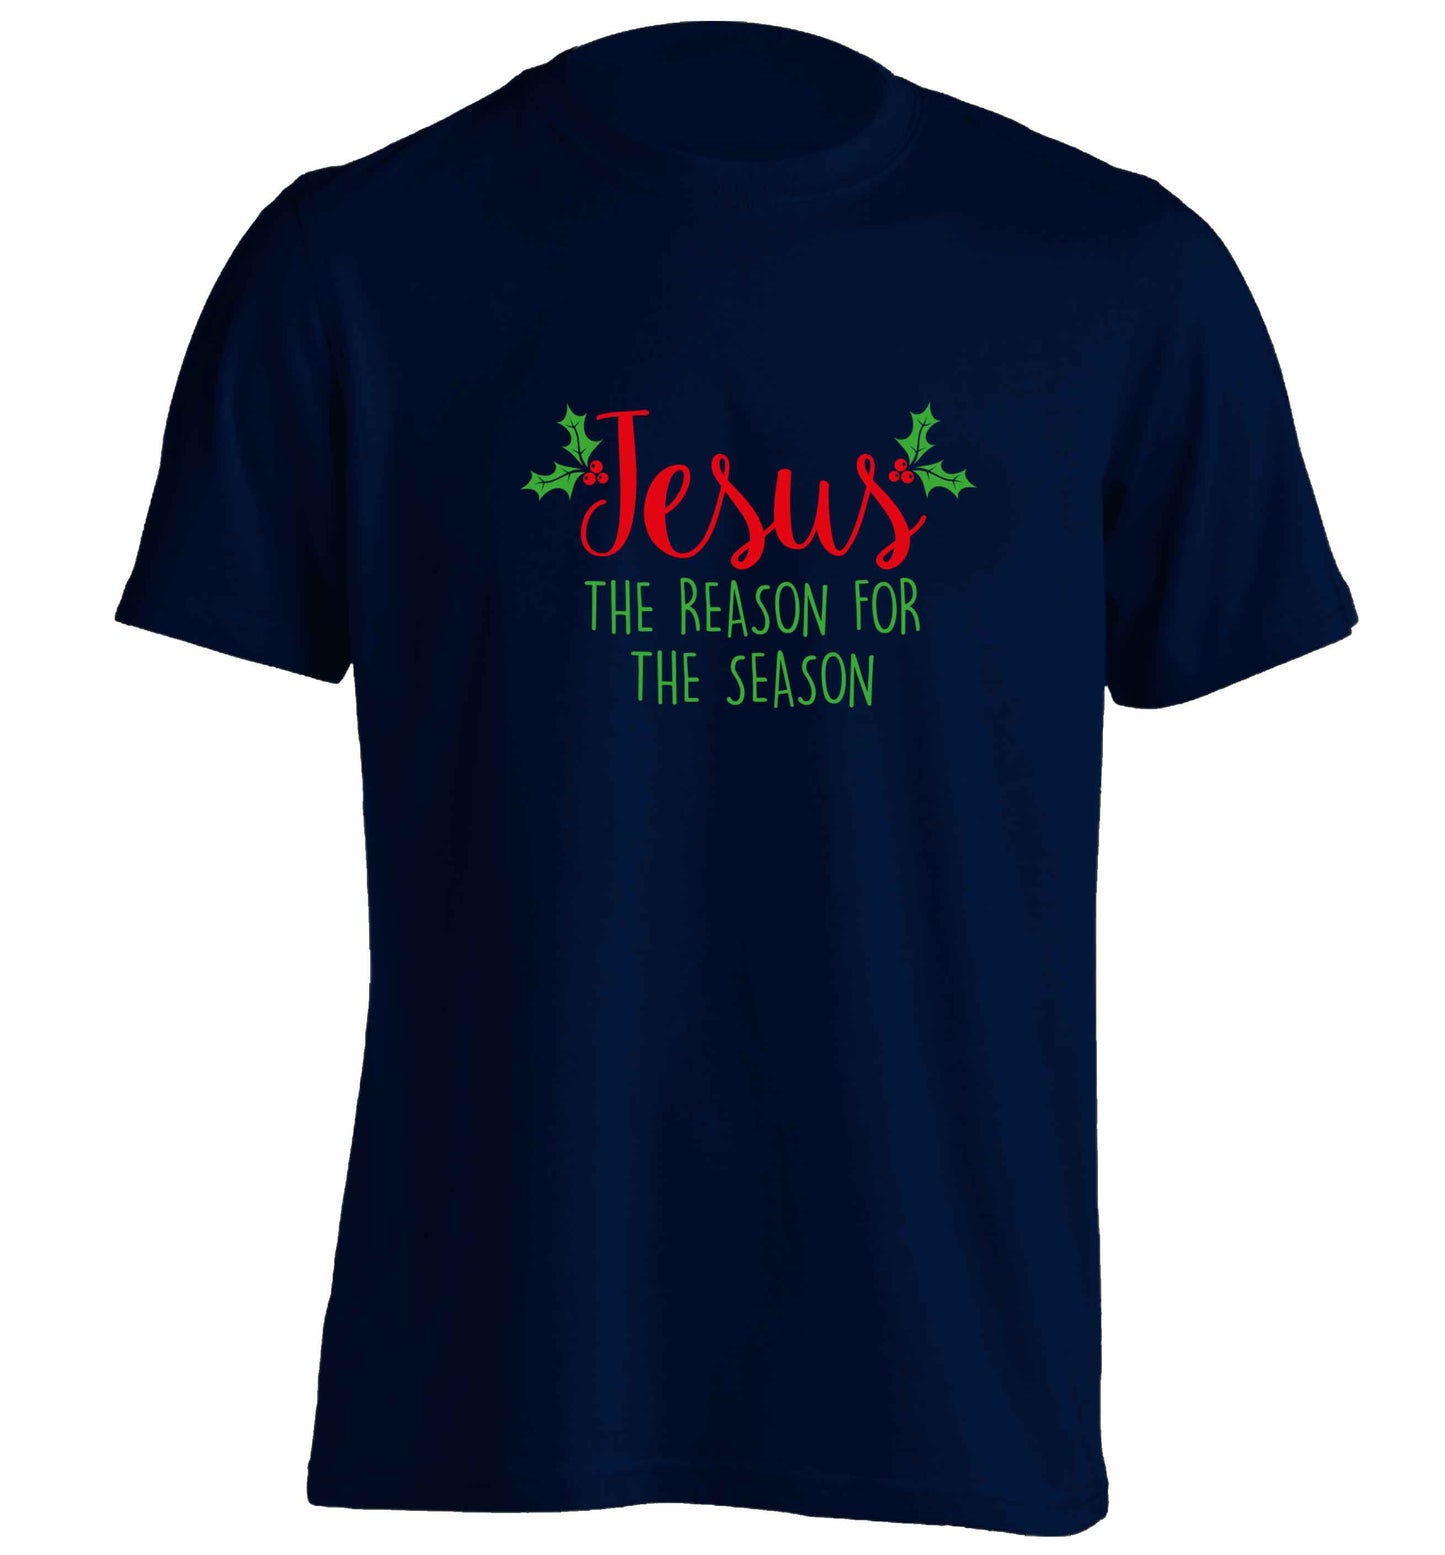 Jesus the reason for the season adults unisex navy Tshirt 2XL